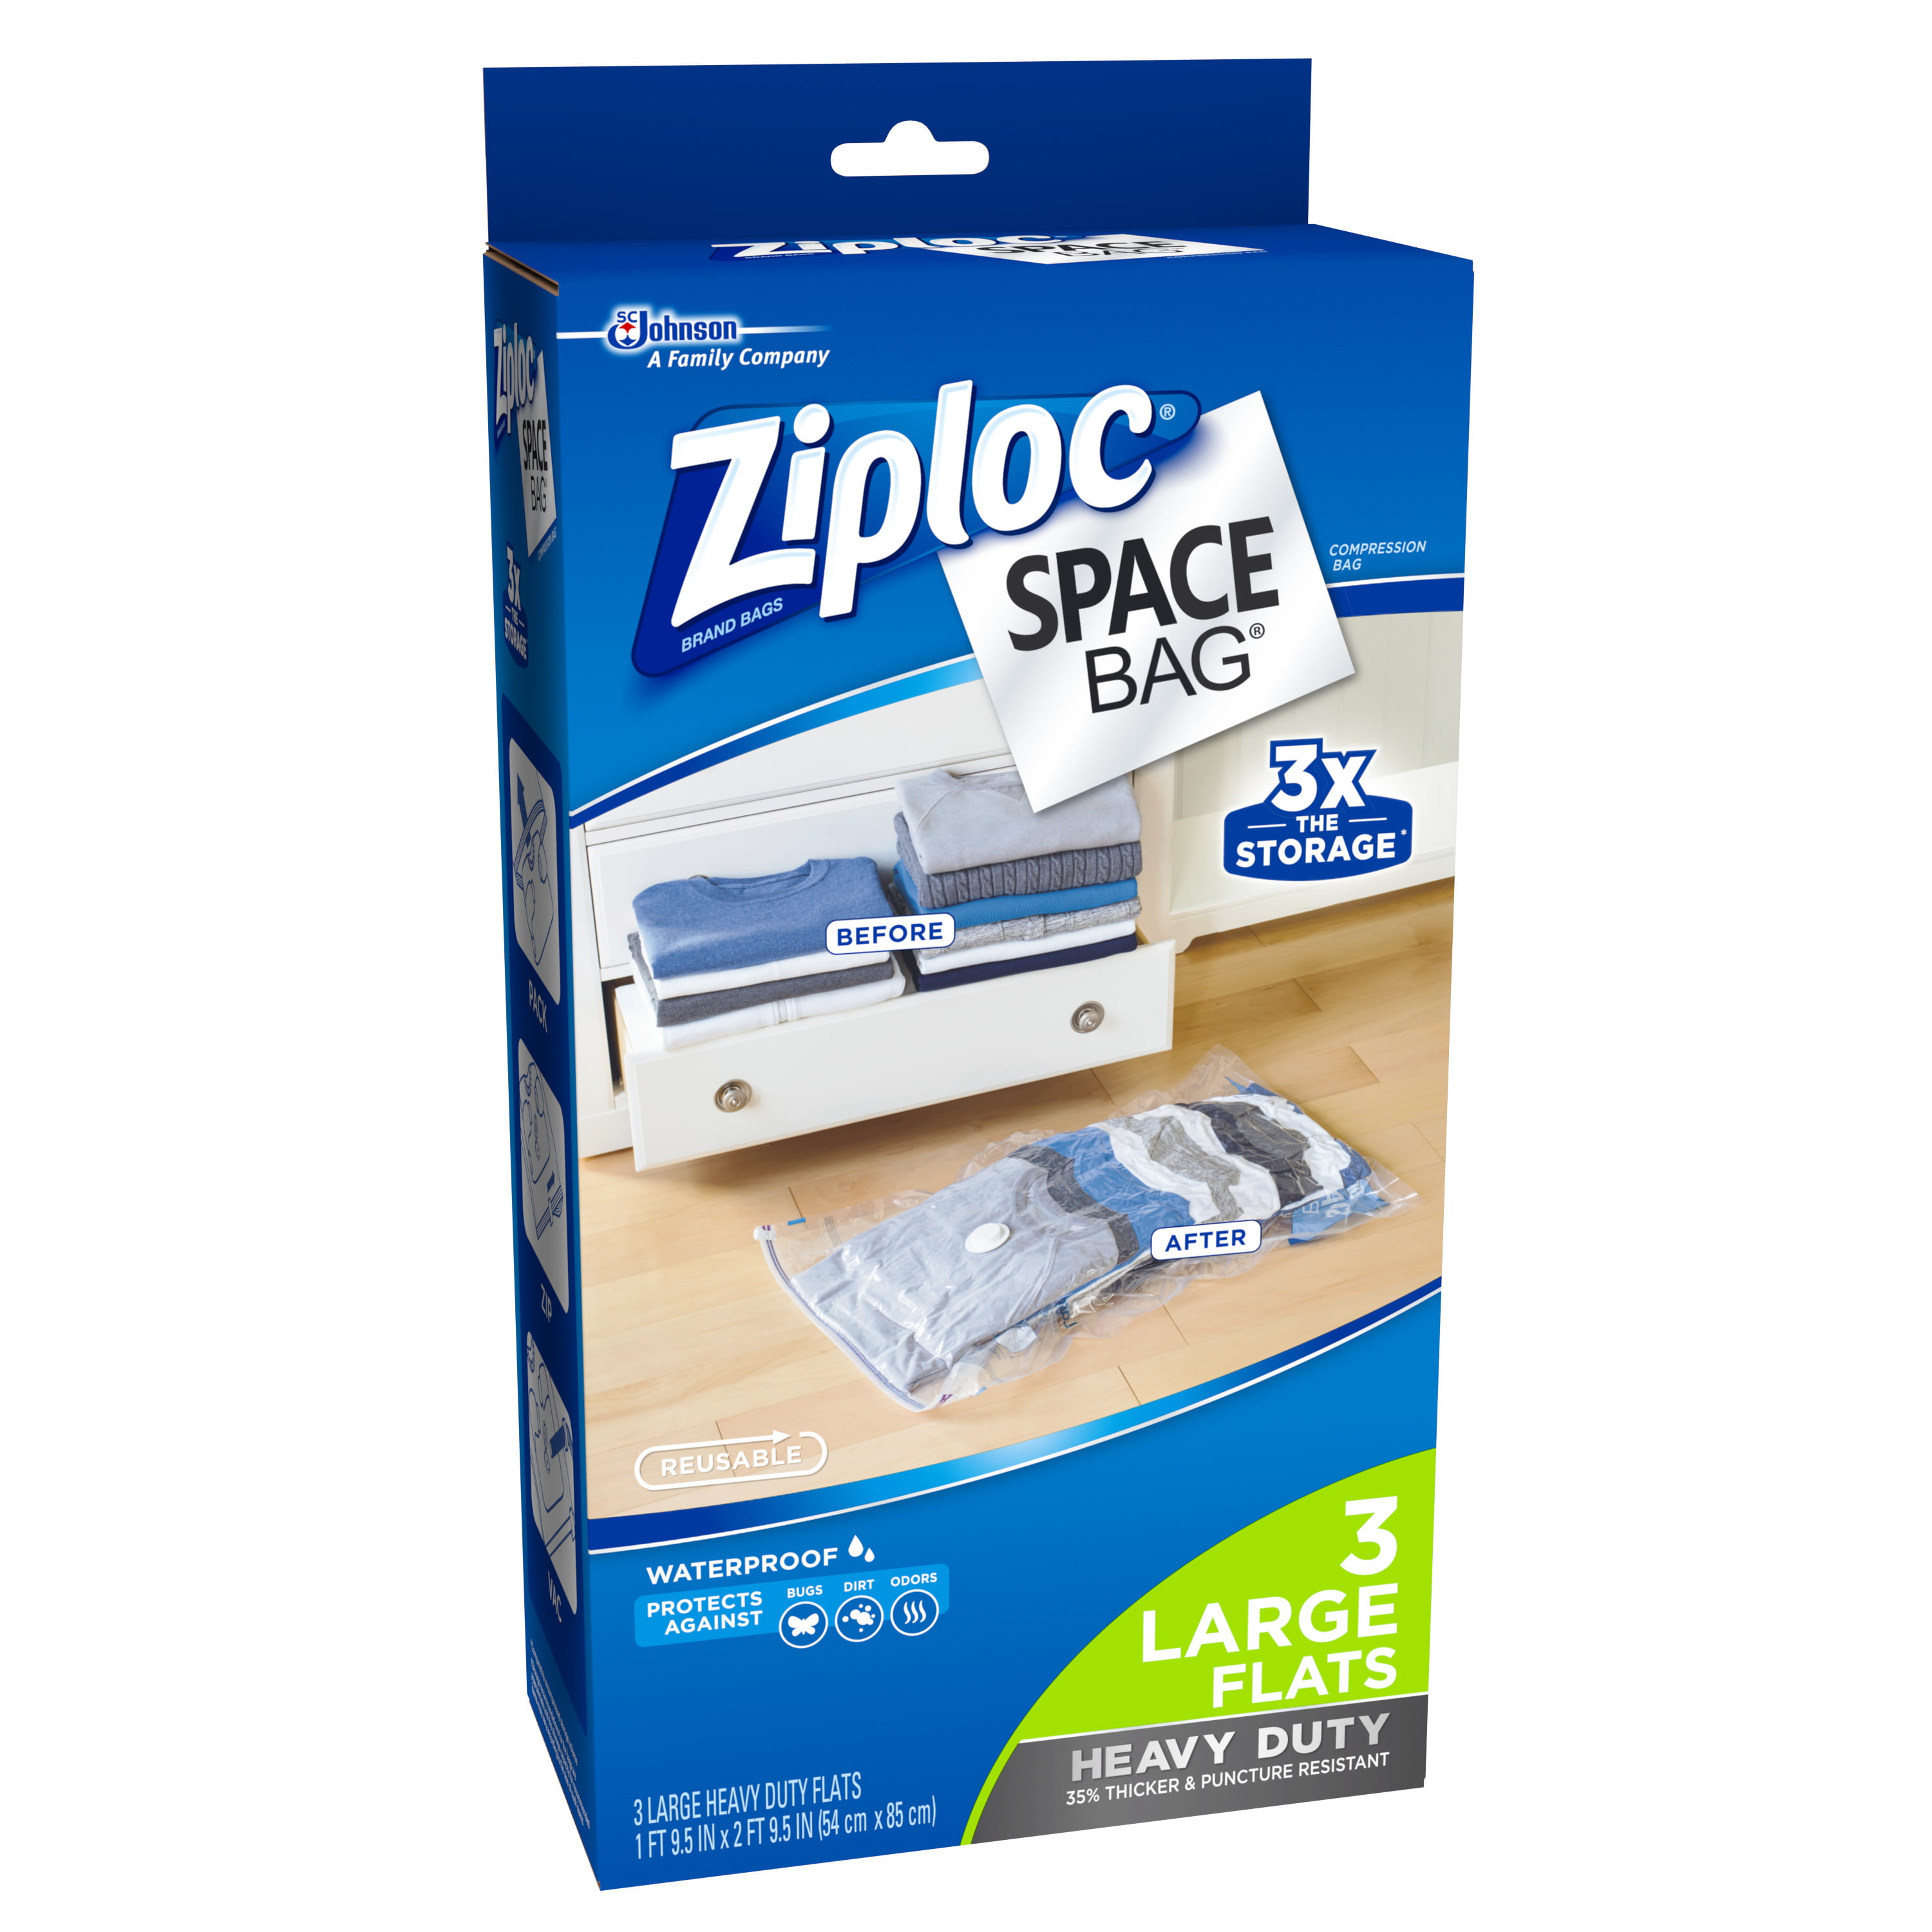 Ziploc®, Space Bag® Medium Flat, Ziploc® brand